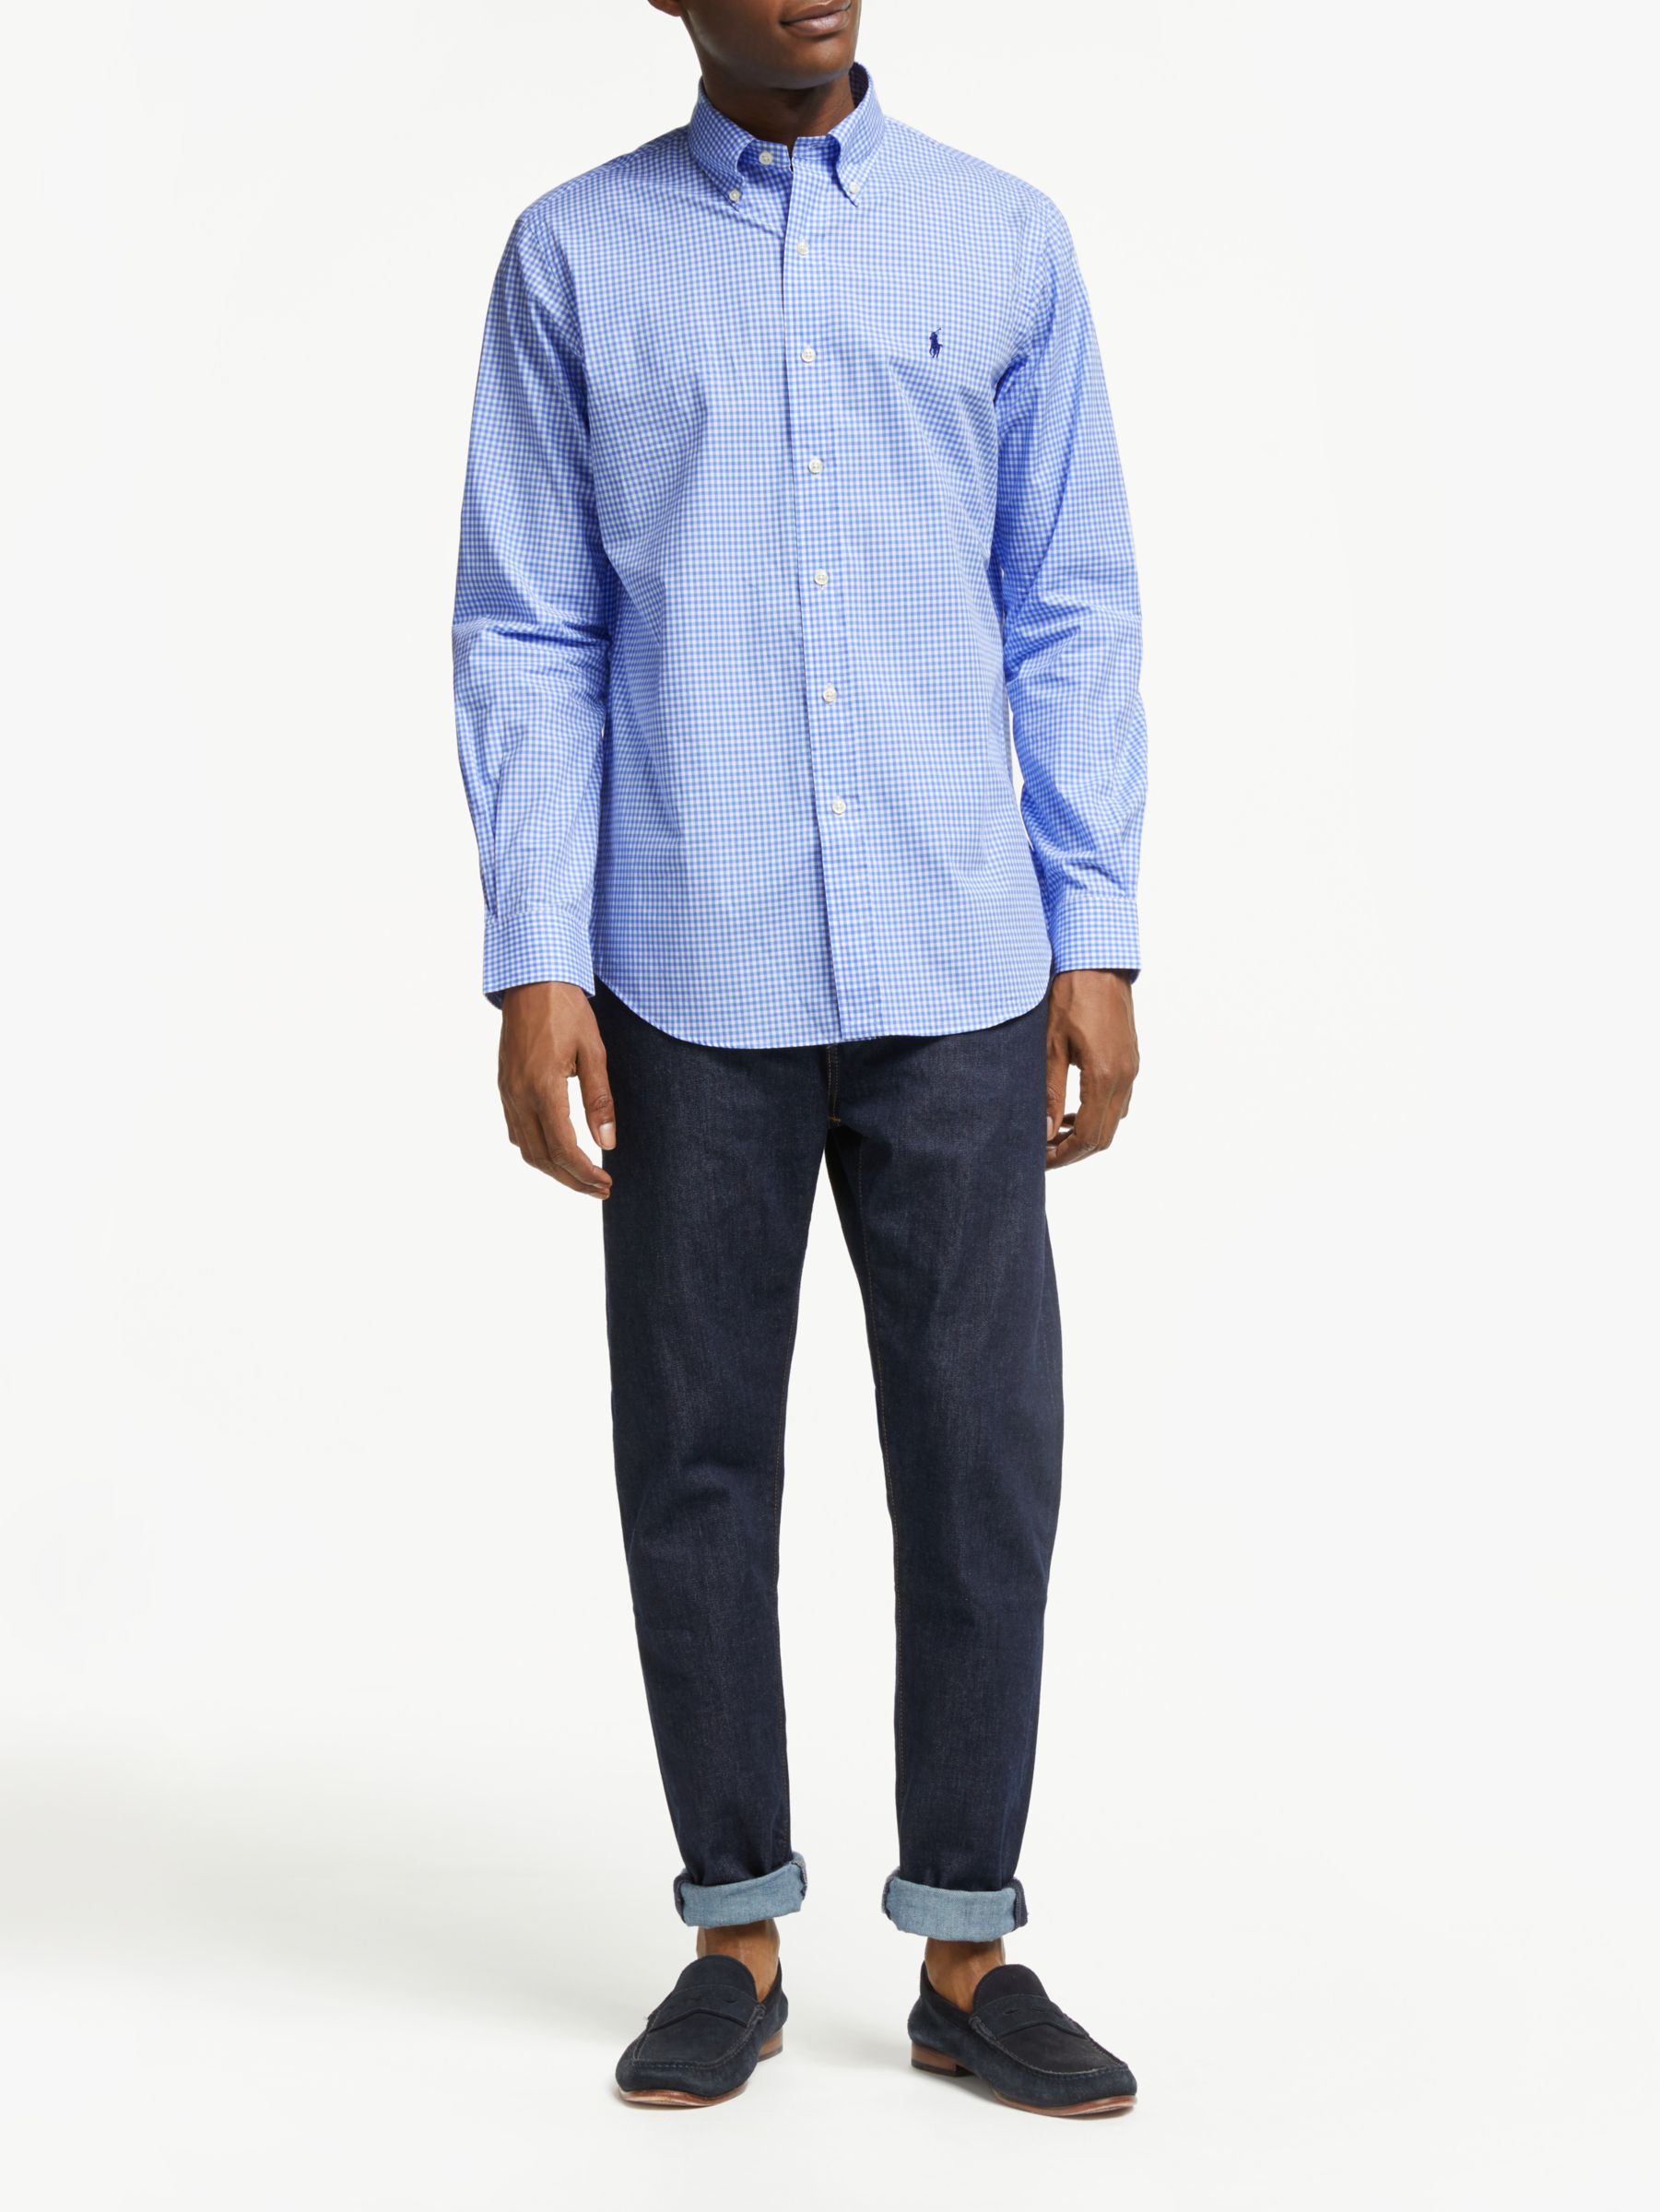 Polo Ralph Lauren Cotton Poplin Shirt, Blue/White at John Lewis & Partners